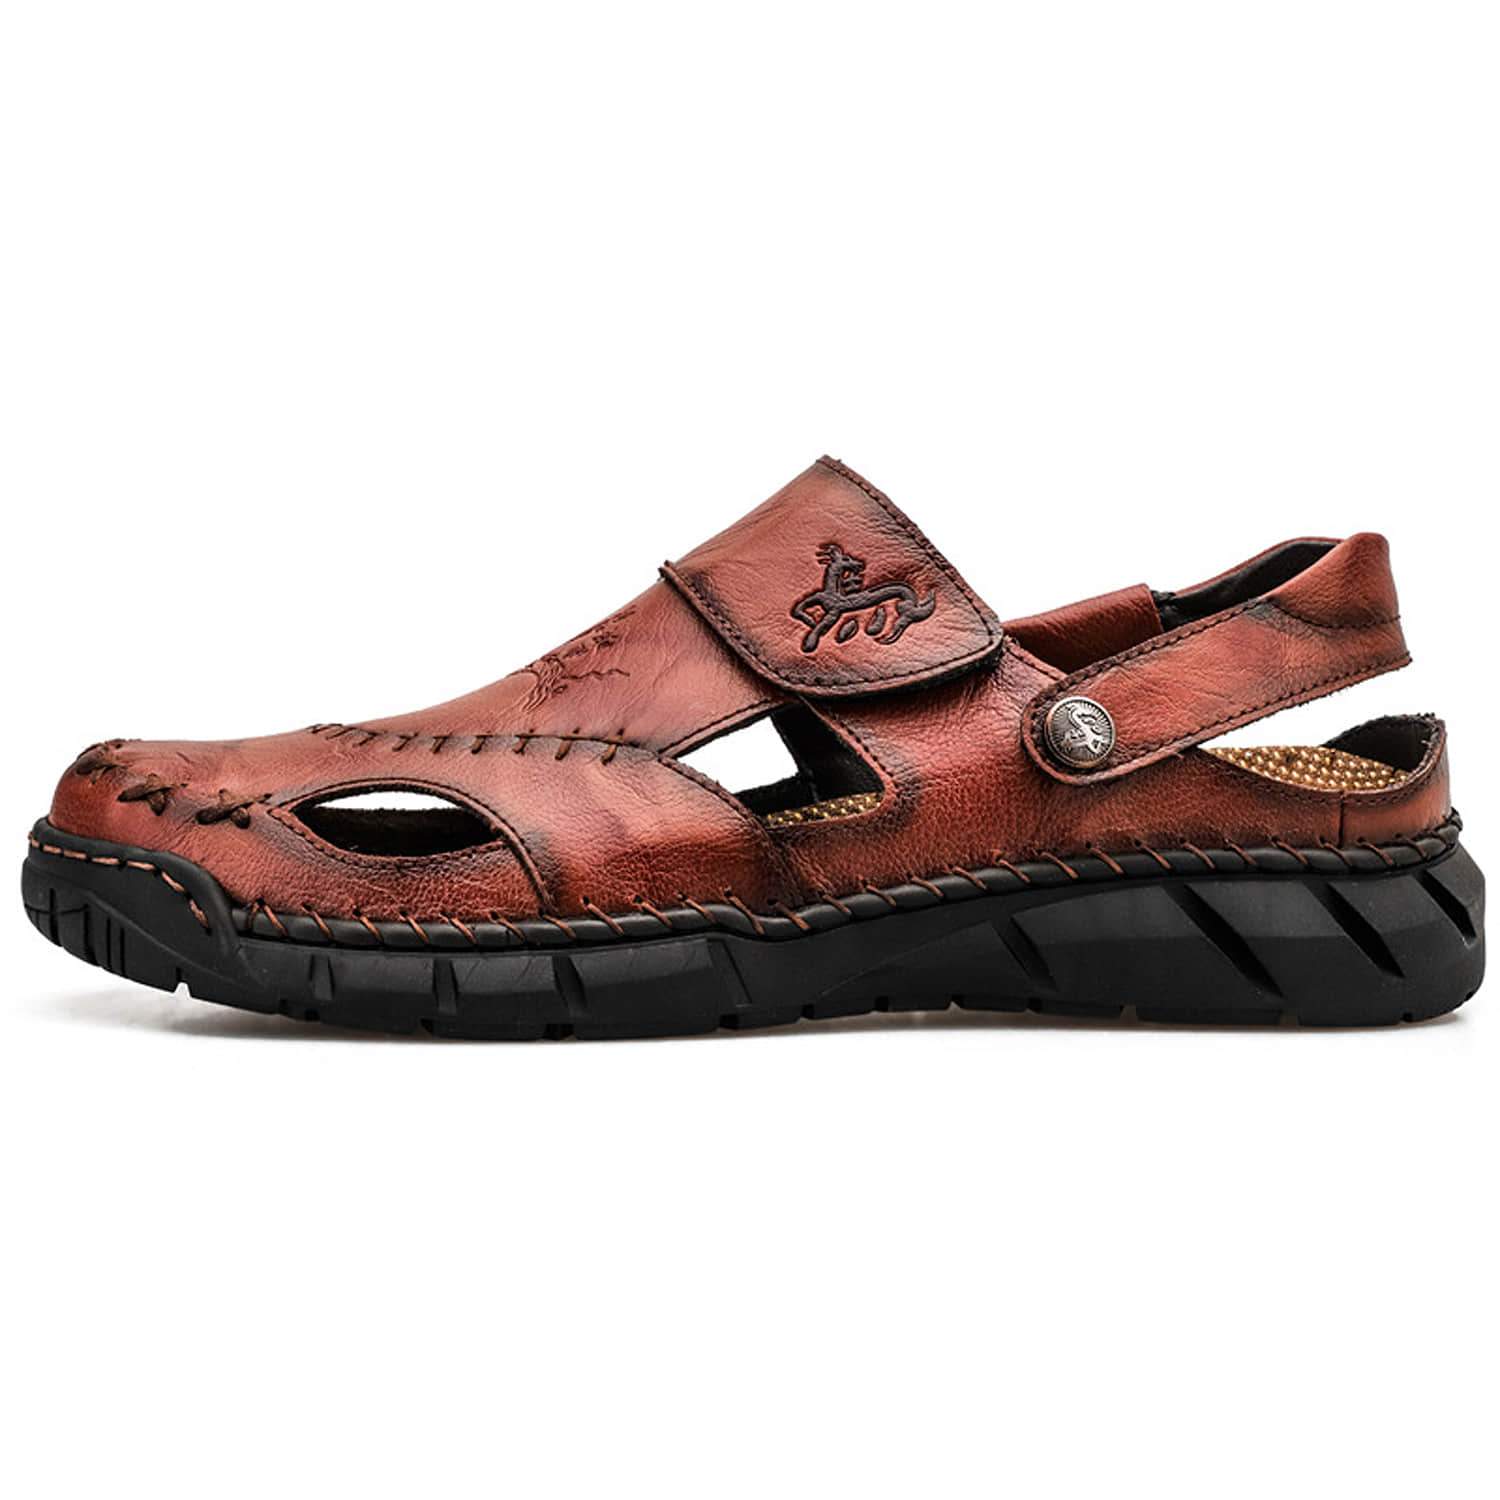 Hiking-Summer-Fisherman-Comfort-Breathable-Sandals